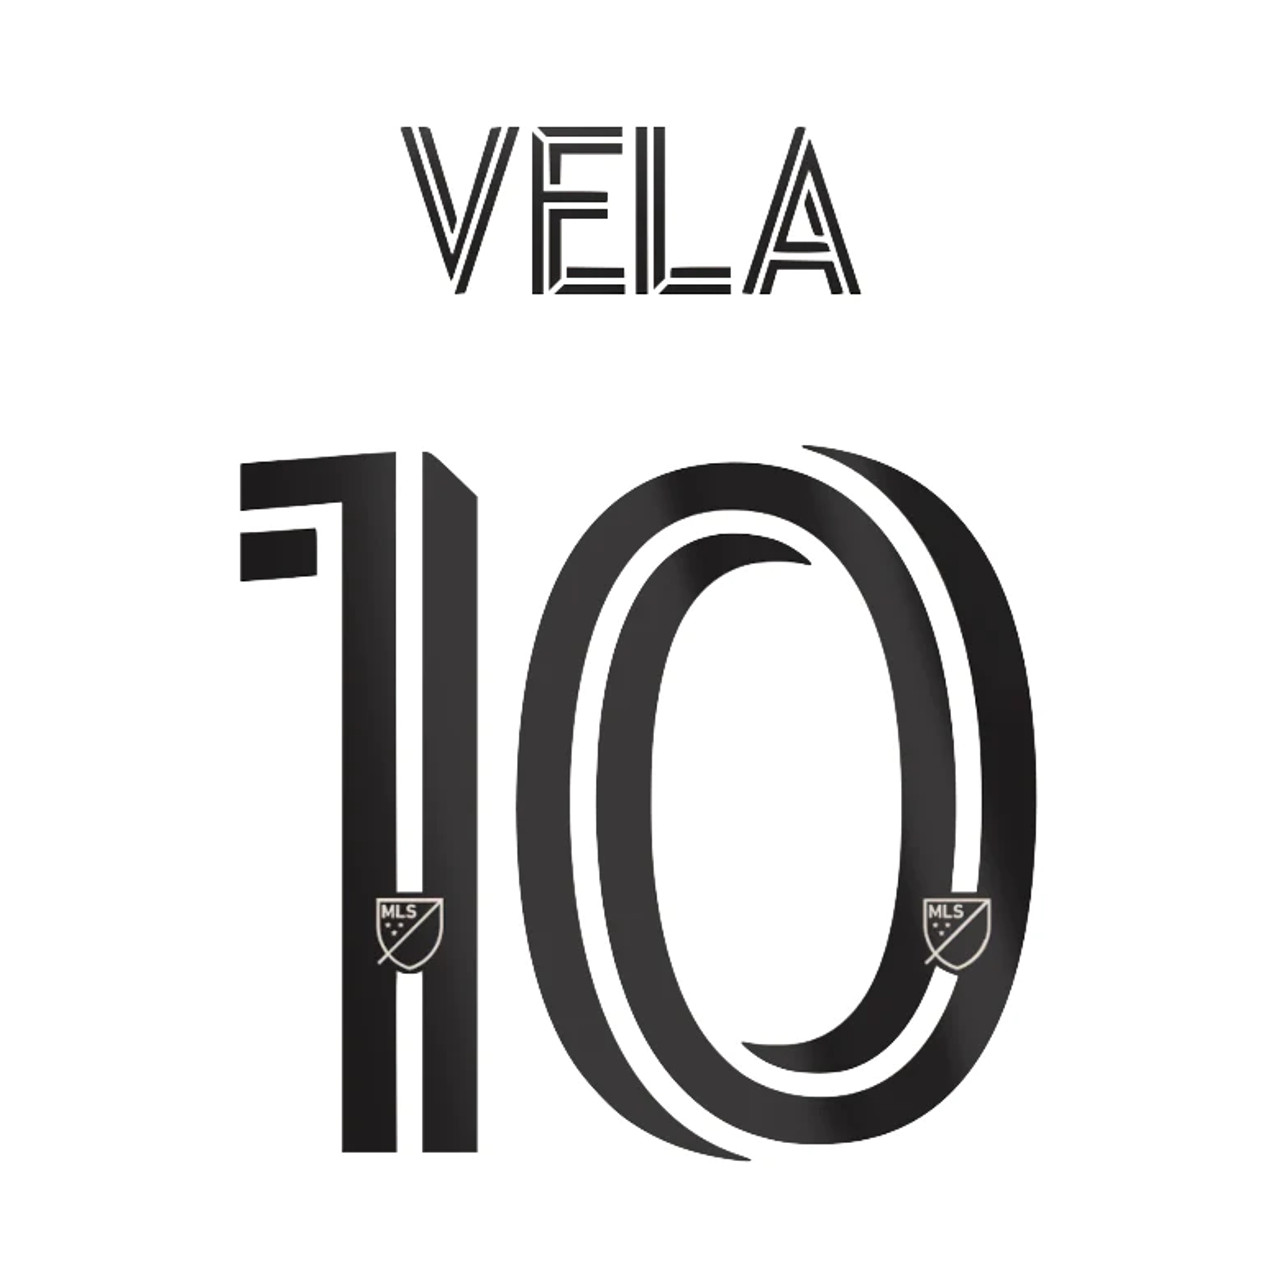 LAFC Carlos Vela #10 Nameset - (010623) - ohp soccer